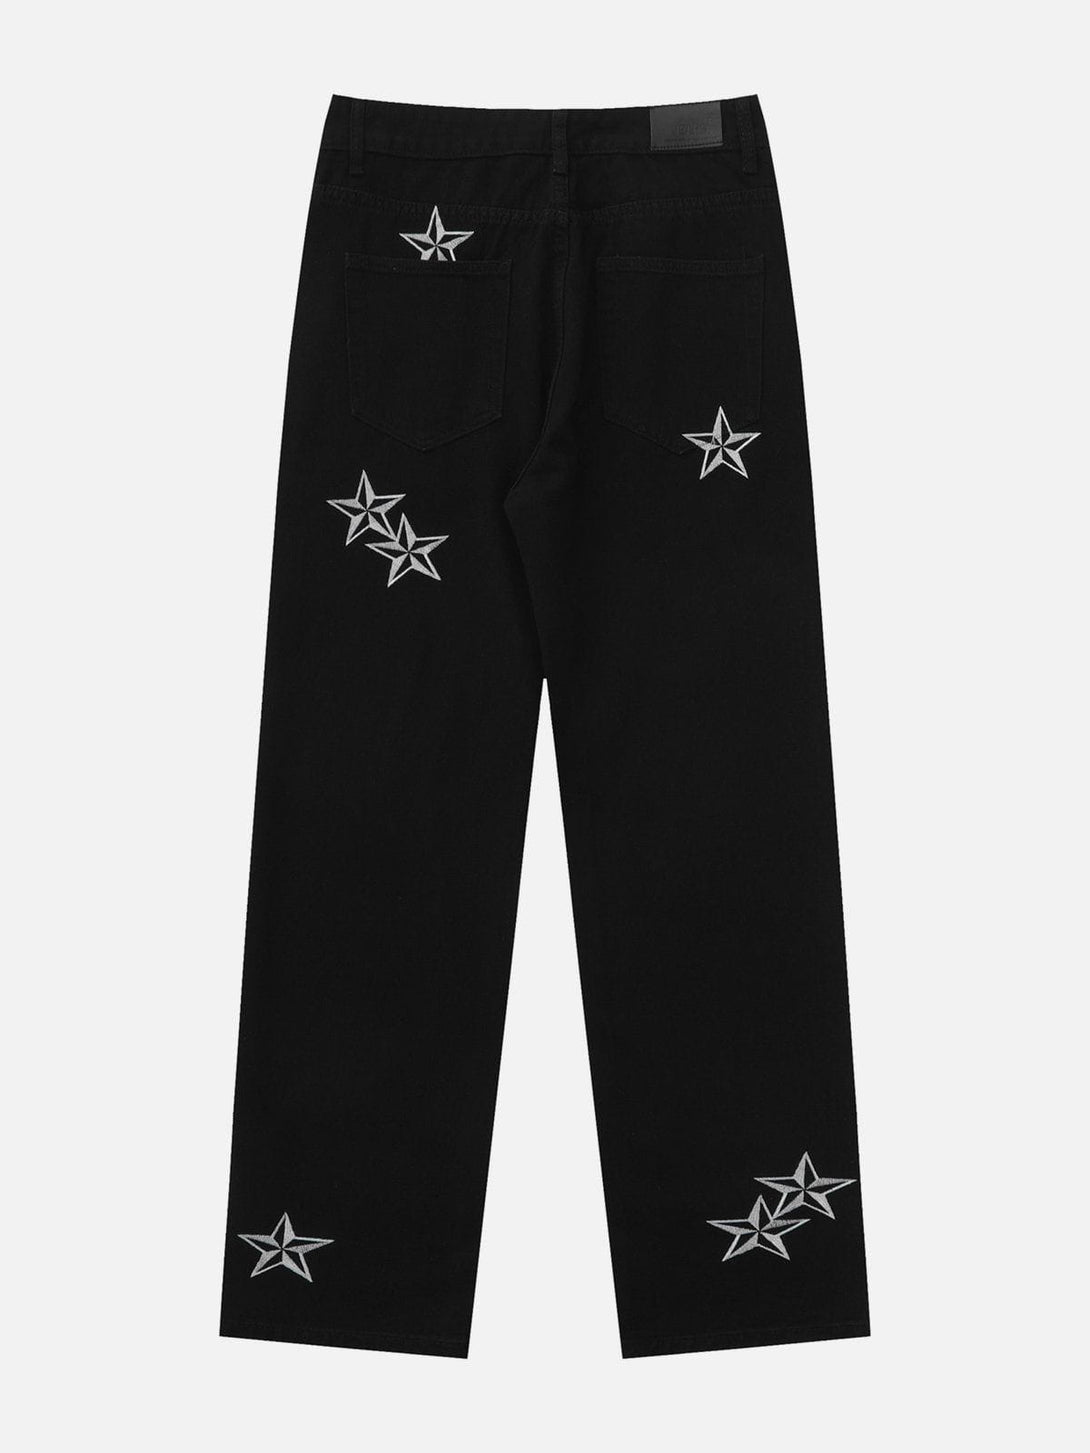 Evapacs - Embroidered Star Jeans- Streetwear Fashion - evapacs.com